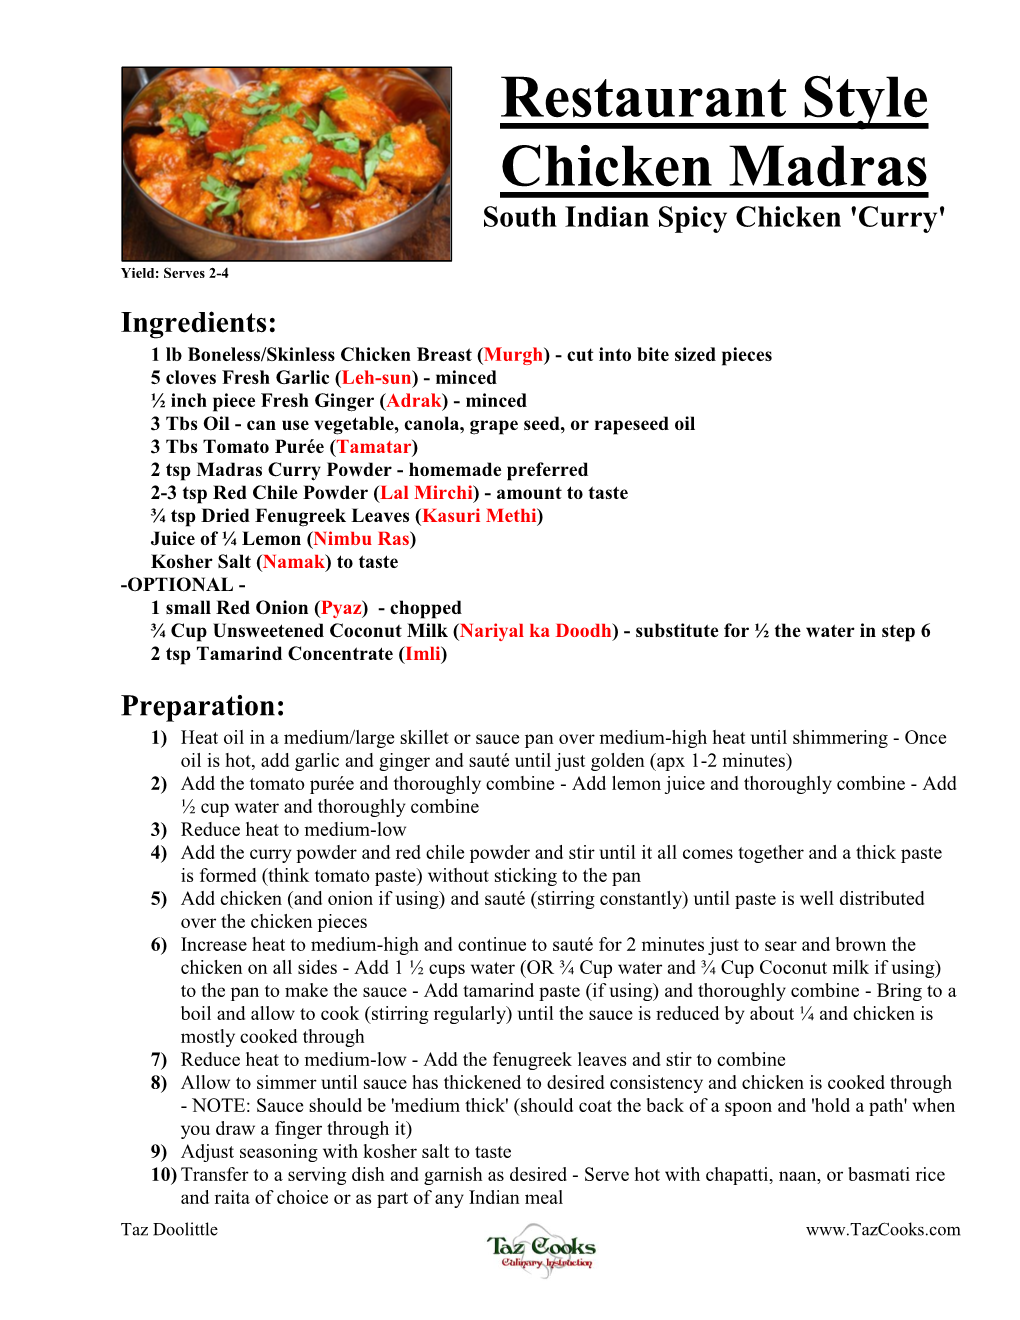 Restaurant Style Chicken Madras South Indian Spicy Chicken 'Curry'